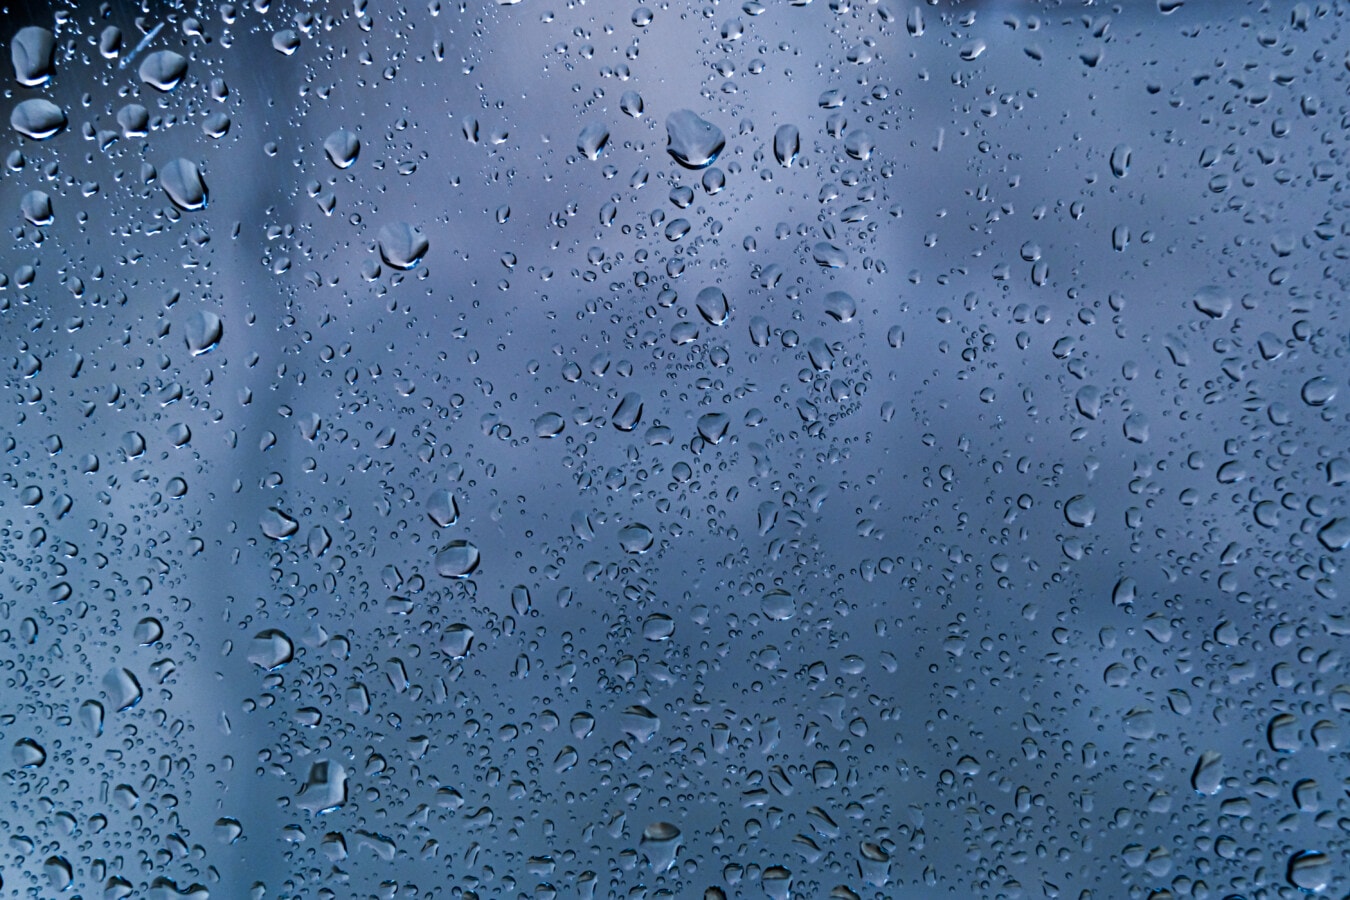 tekstur, hujan, kaca, kondensasi, titisan hujan, tetesan, kelembaban, transparan, cairan, basah